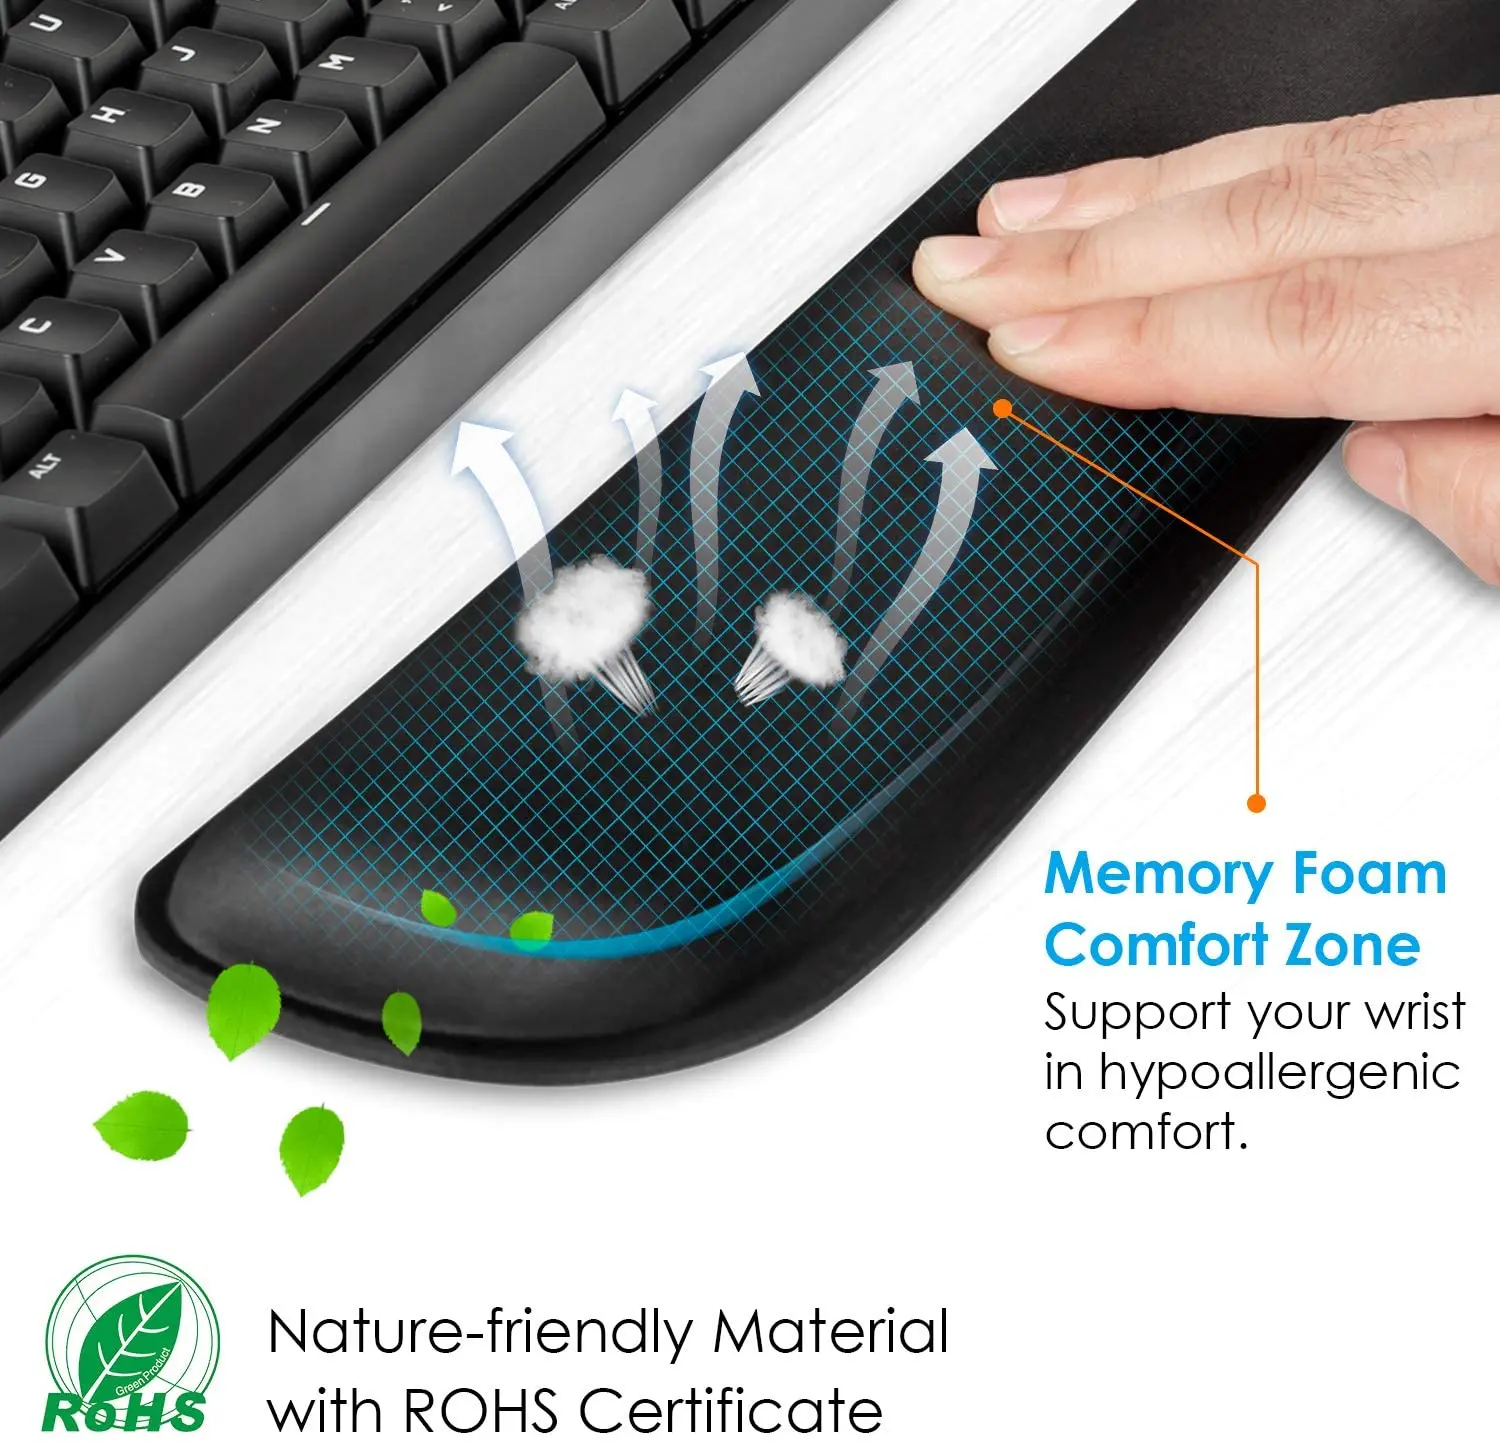 rakoon wrist rest mouse pad memory foam superfine fibre wrist rest pad ergonomic mousepad for typist office gaming pc laptop free global shipping